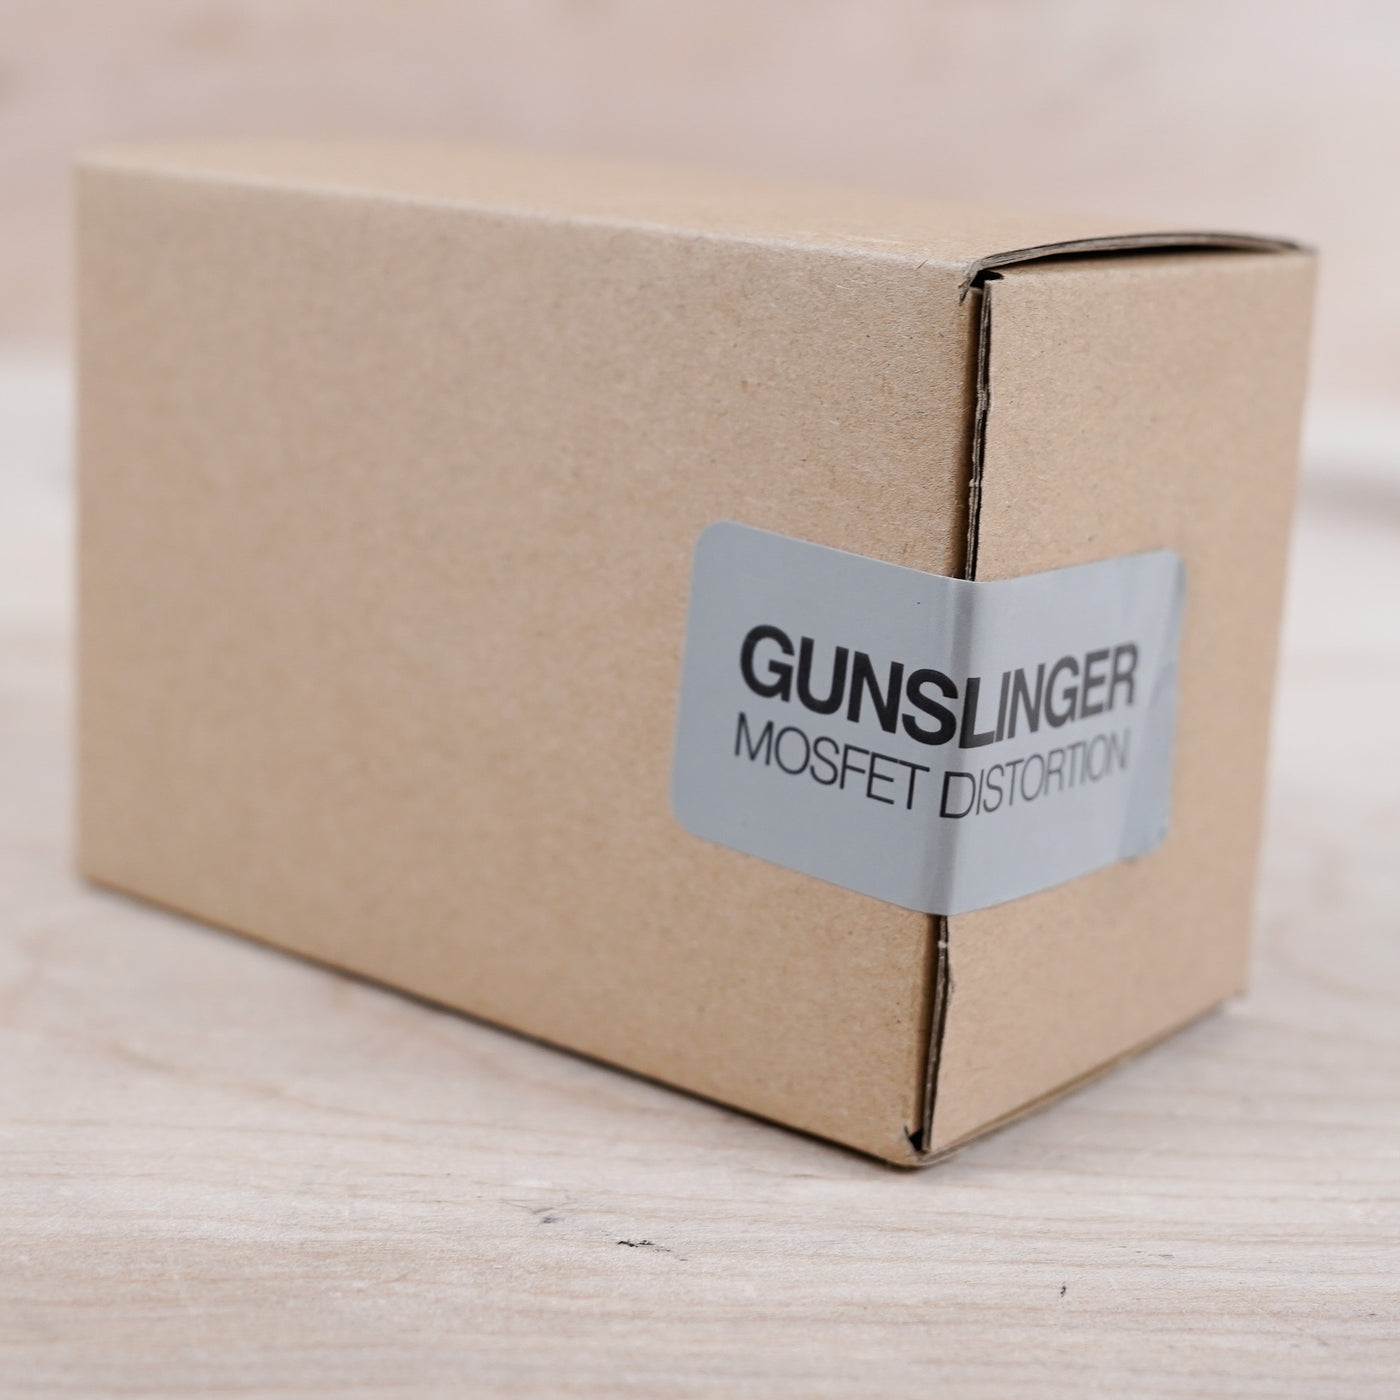 DOD Gunslinger Mosfet Distortion NOS New Old Stock in Box